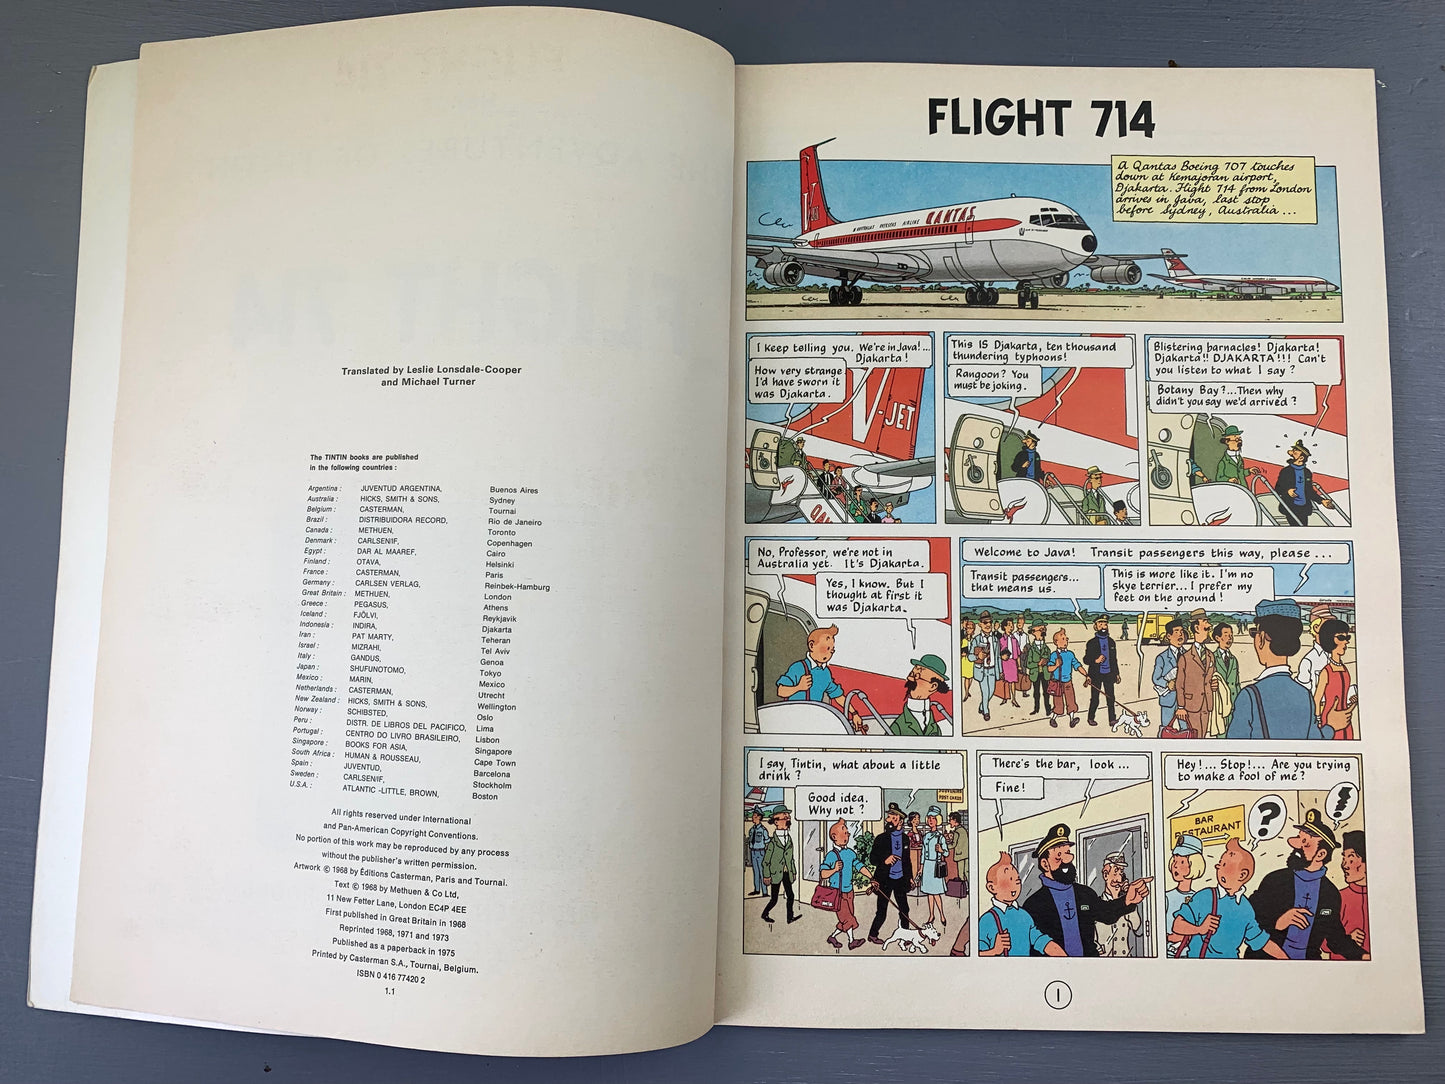 Flight 714 - Tintin Methuen 1st UK Paperback Edition Book 1970s